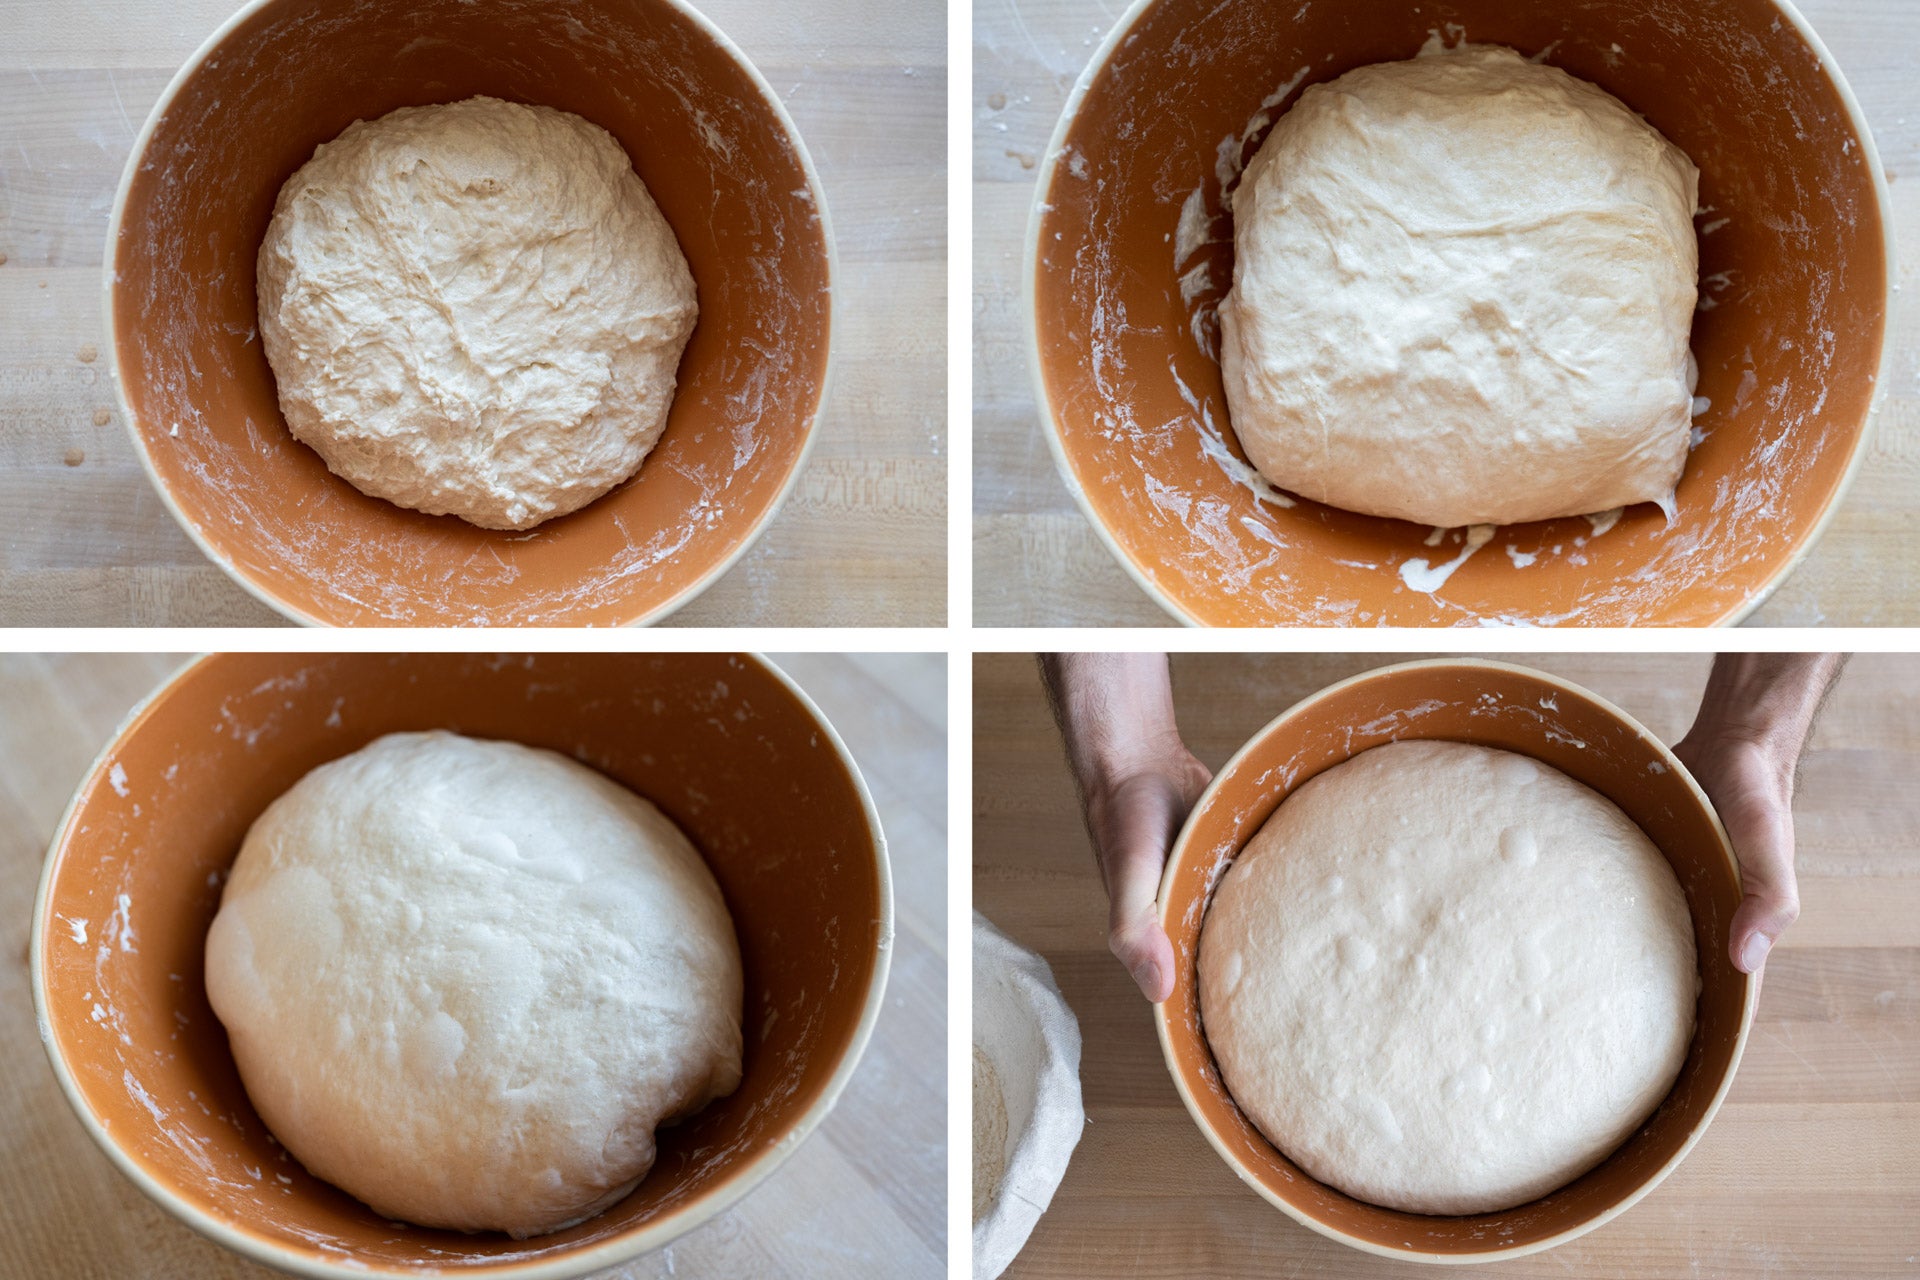 Fermentation in a bread dough